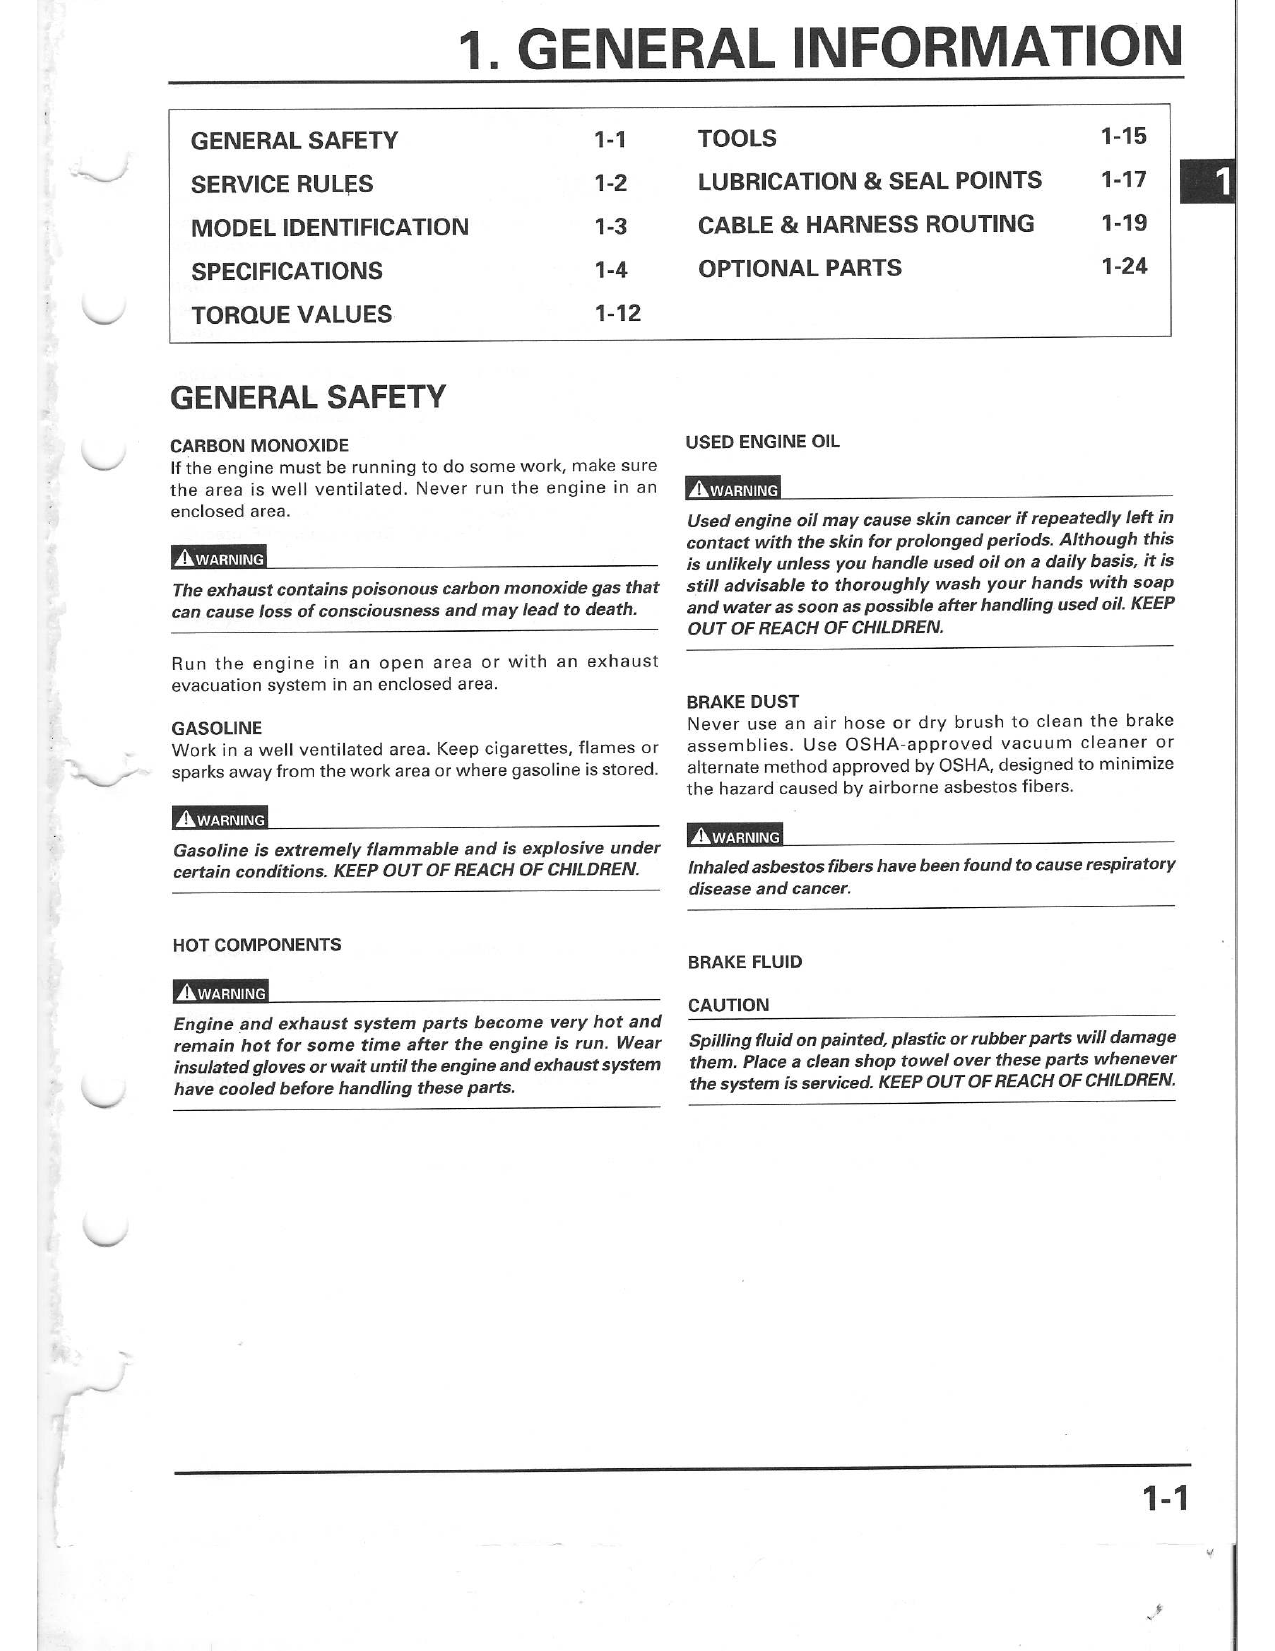 2000-2001 Honda CR250R service manual Preview image 4